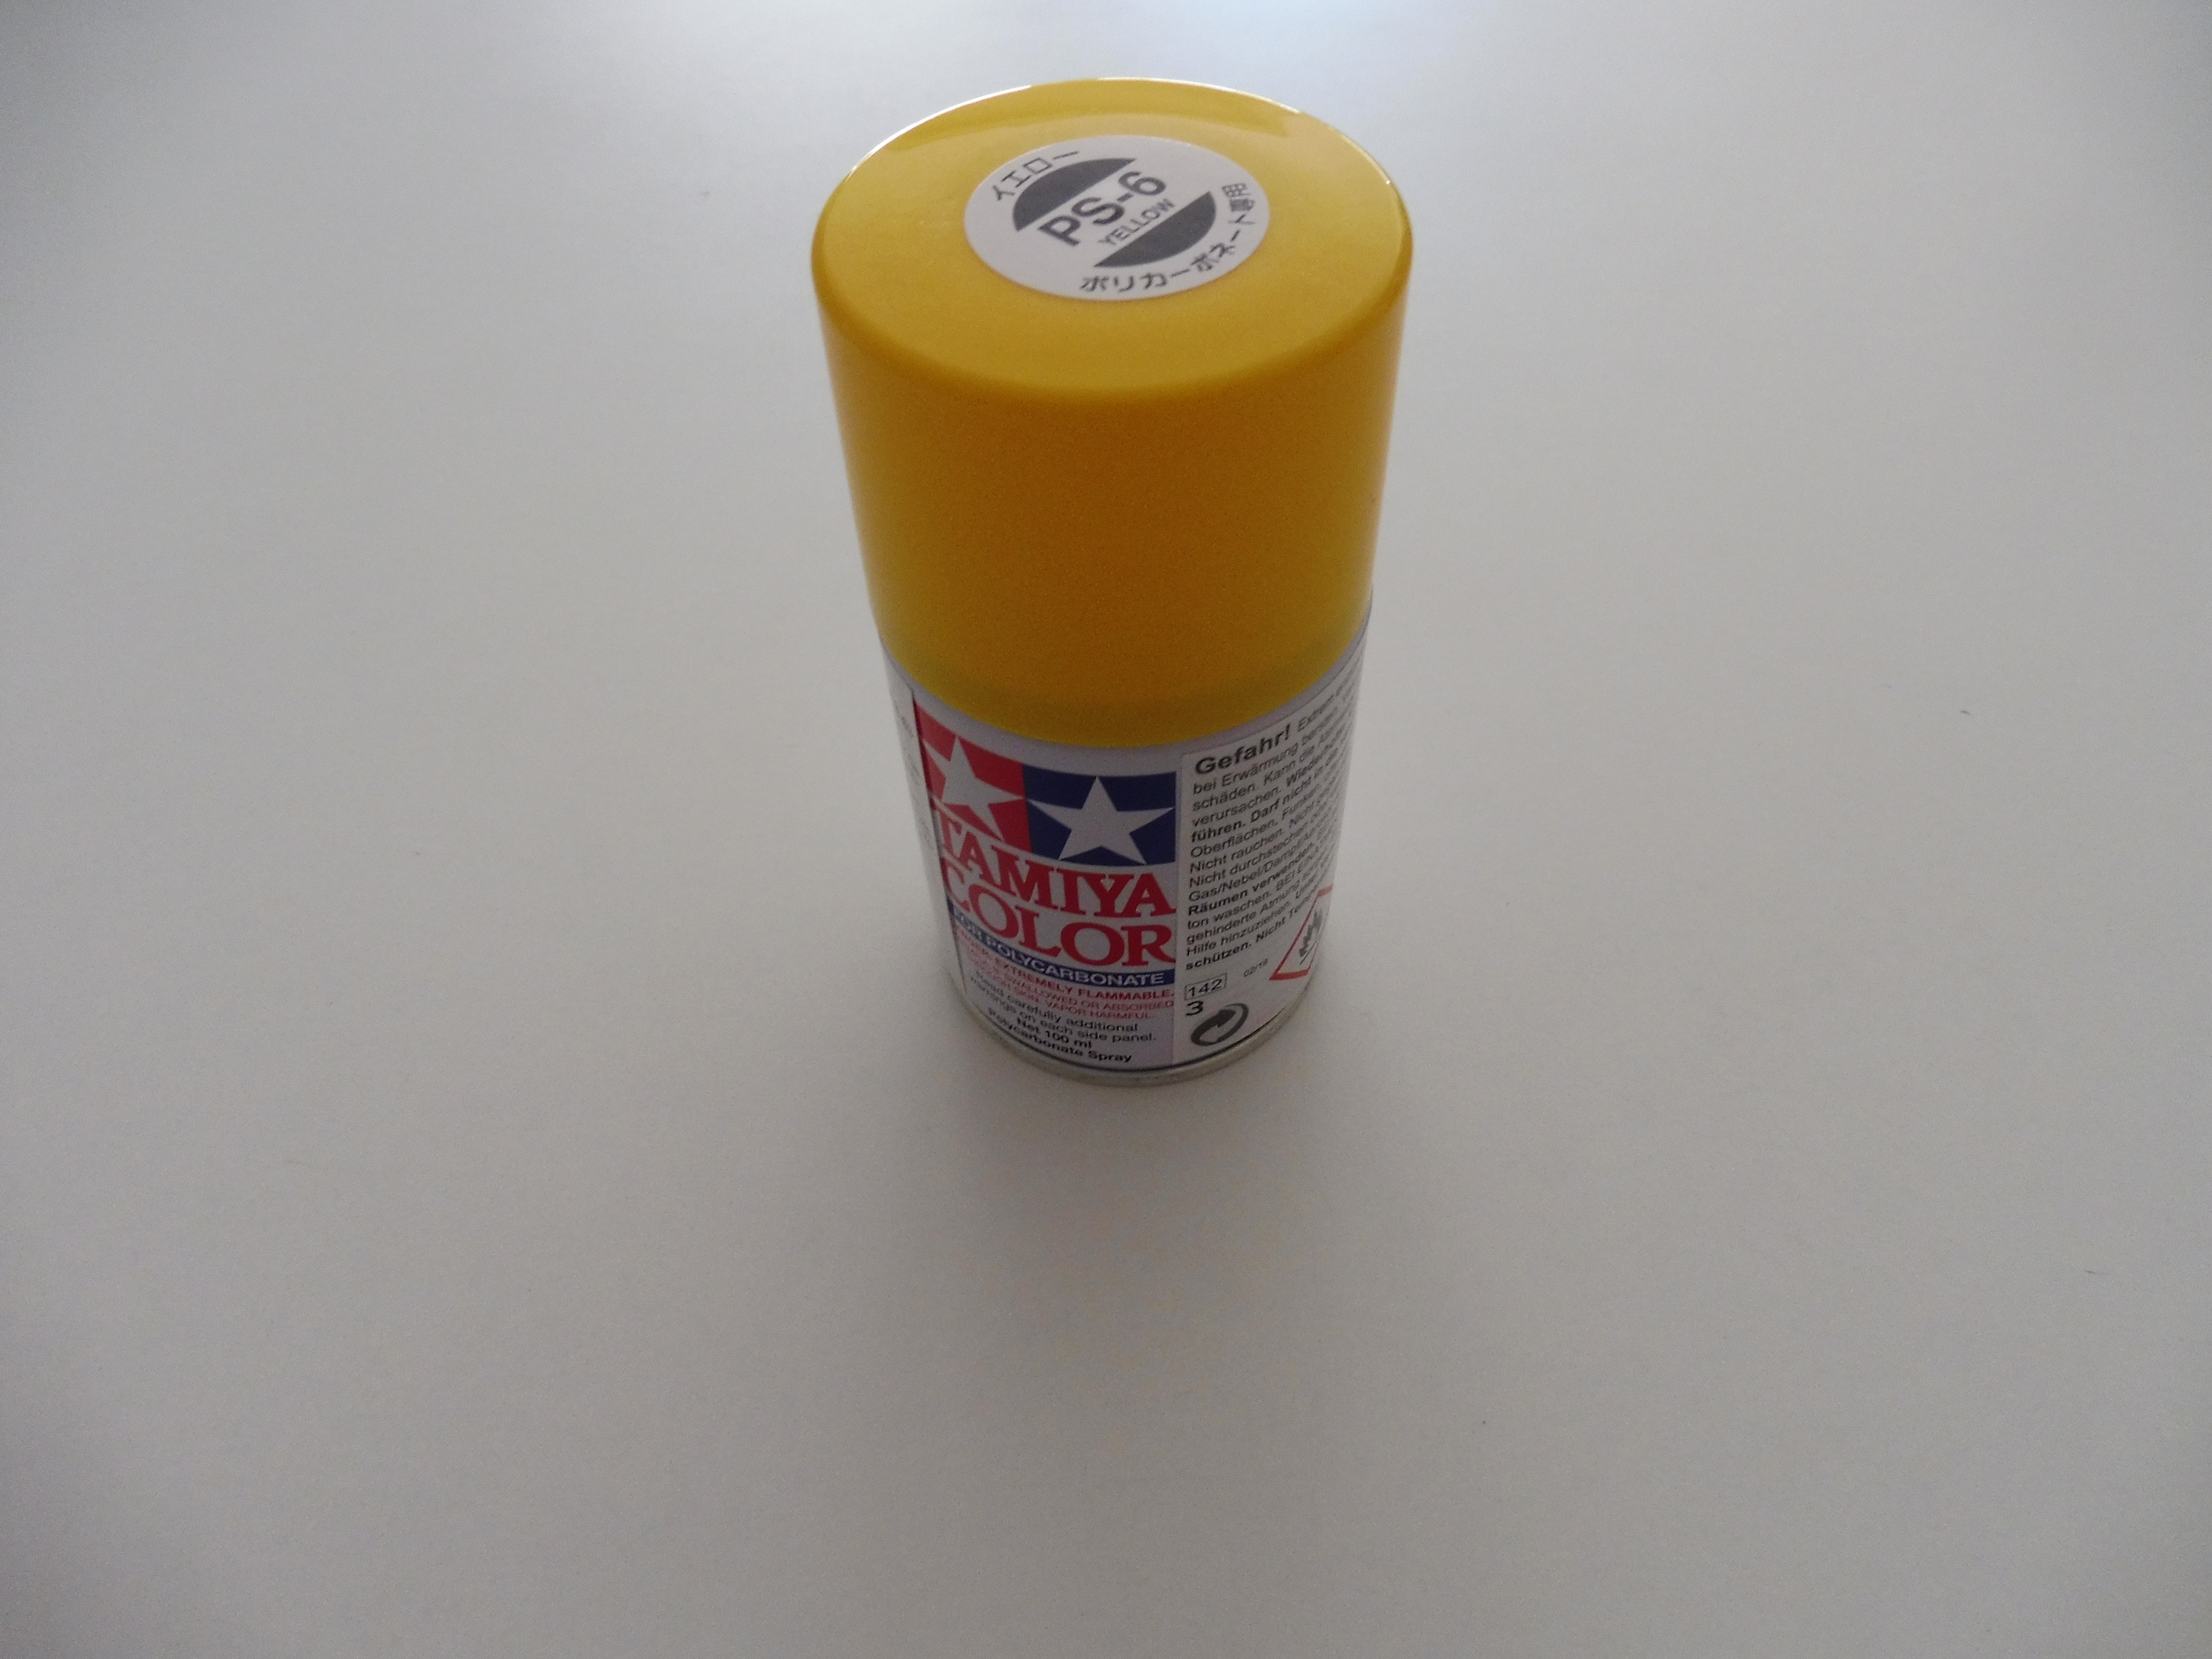 PS Paint Chips - Tamiya Color Spray for Polycarbonate / Tamiya USA